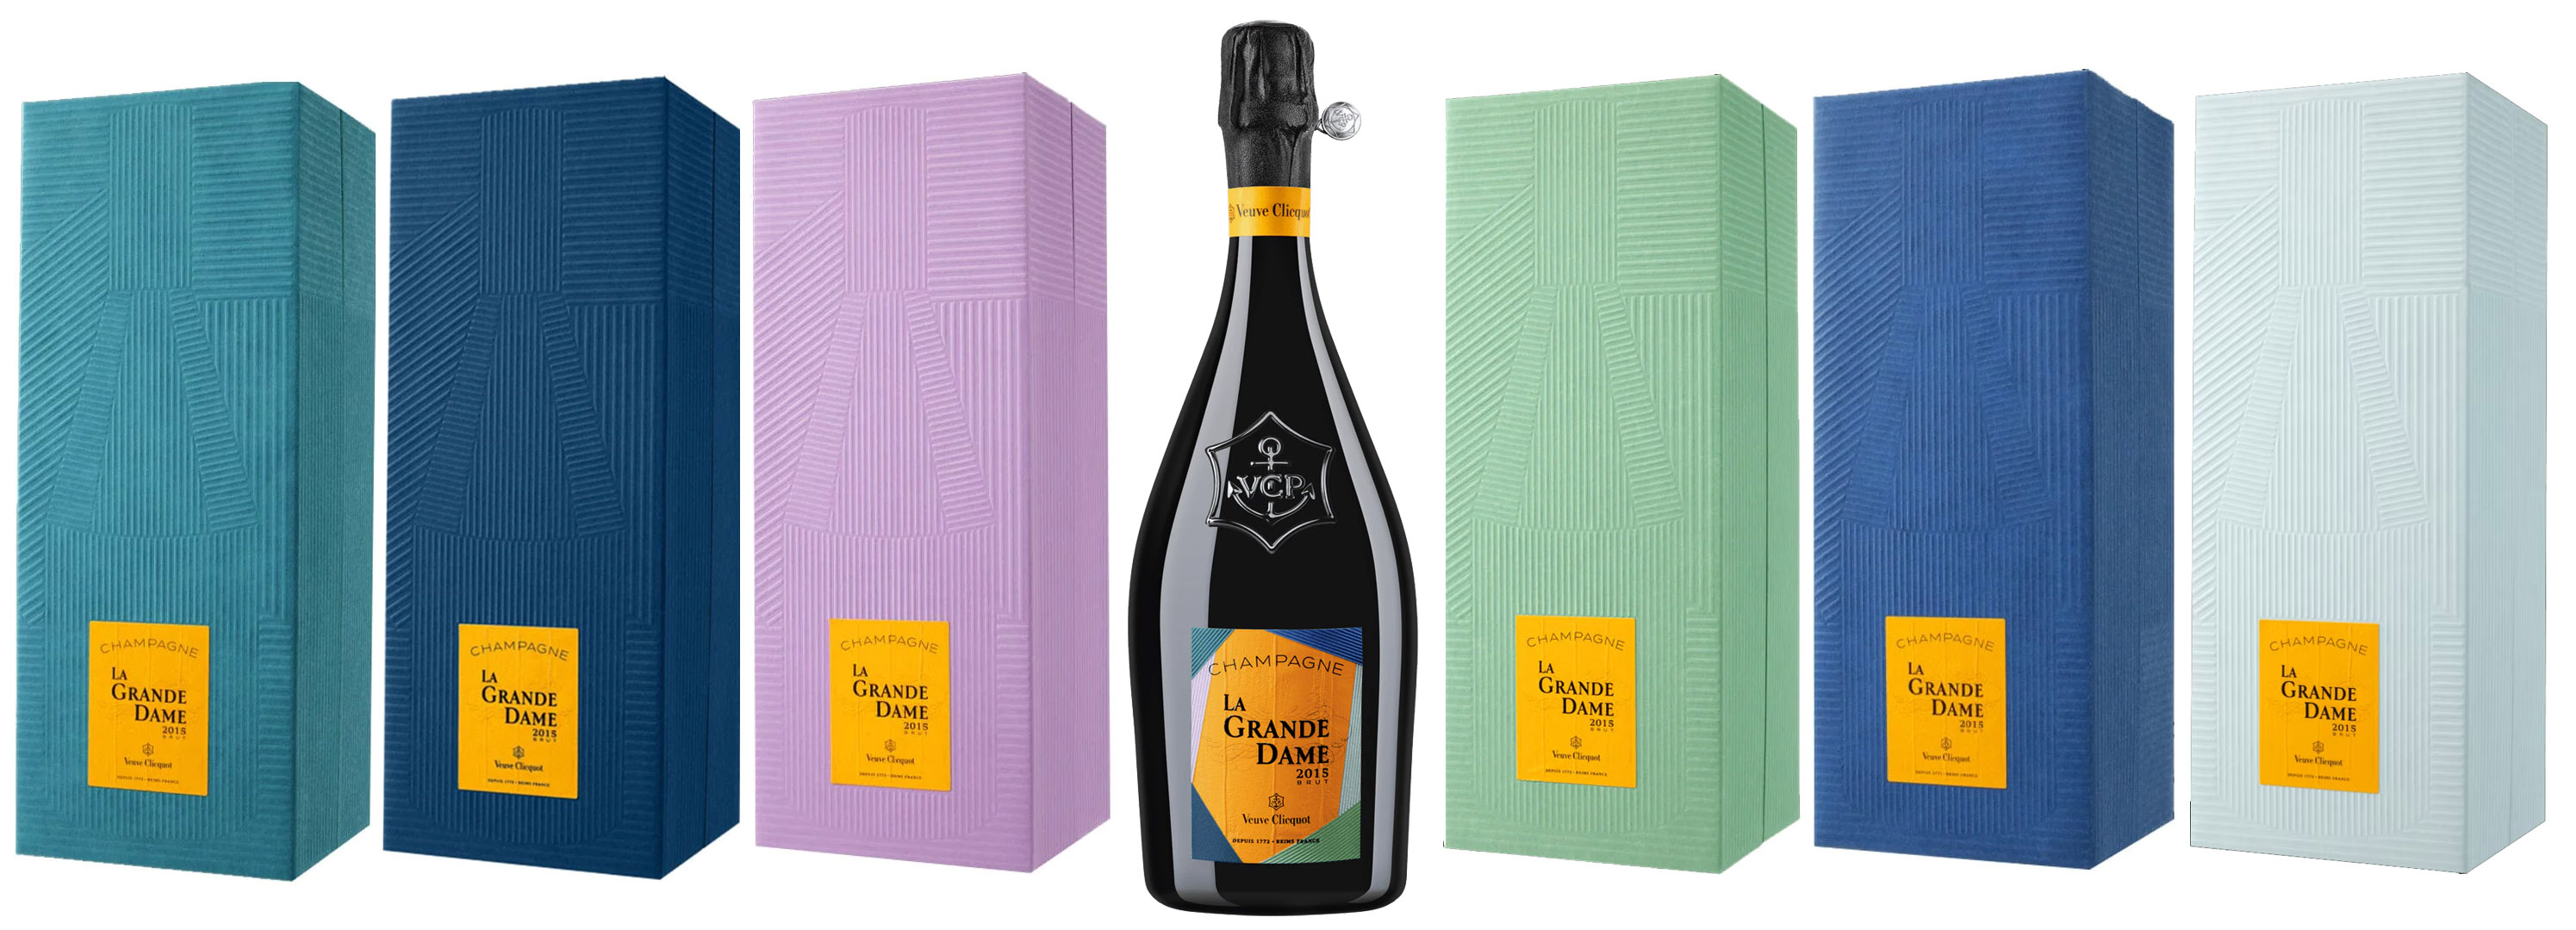 Buy Veuve Clicquot La Grande Dame by Paola Paronetto Online!